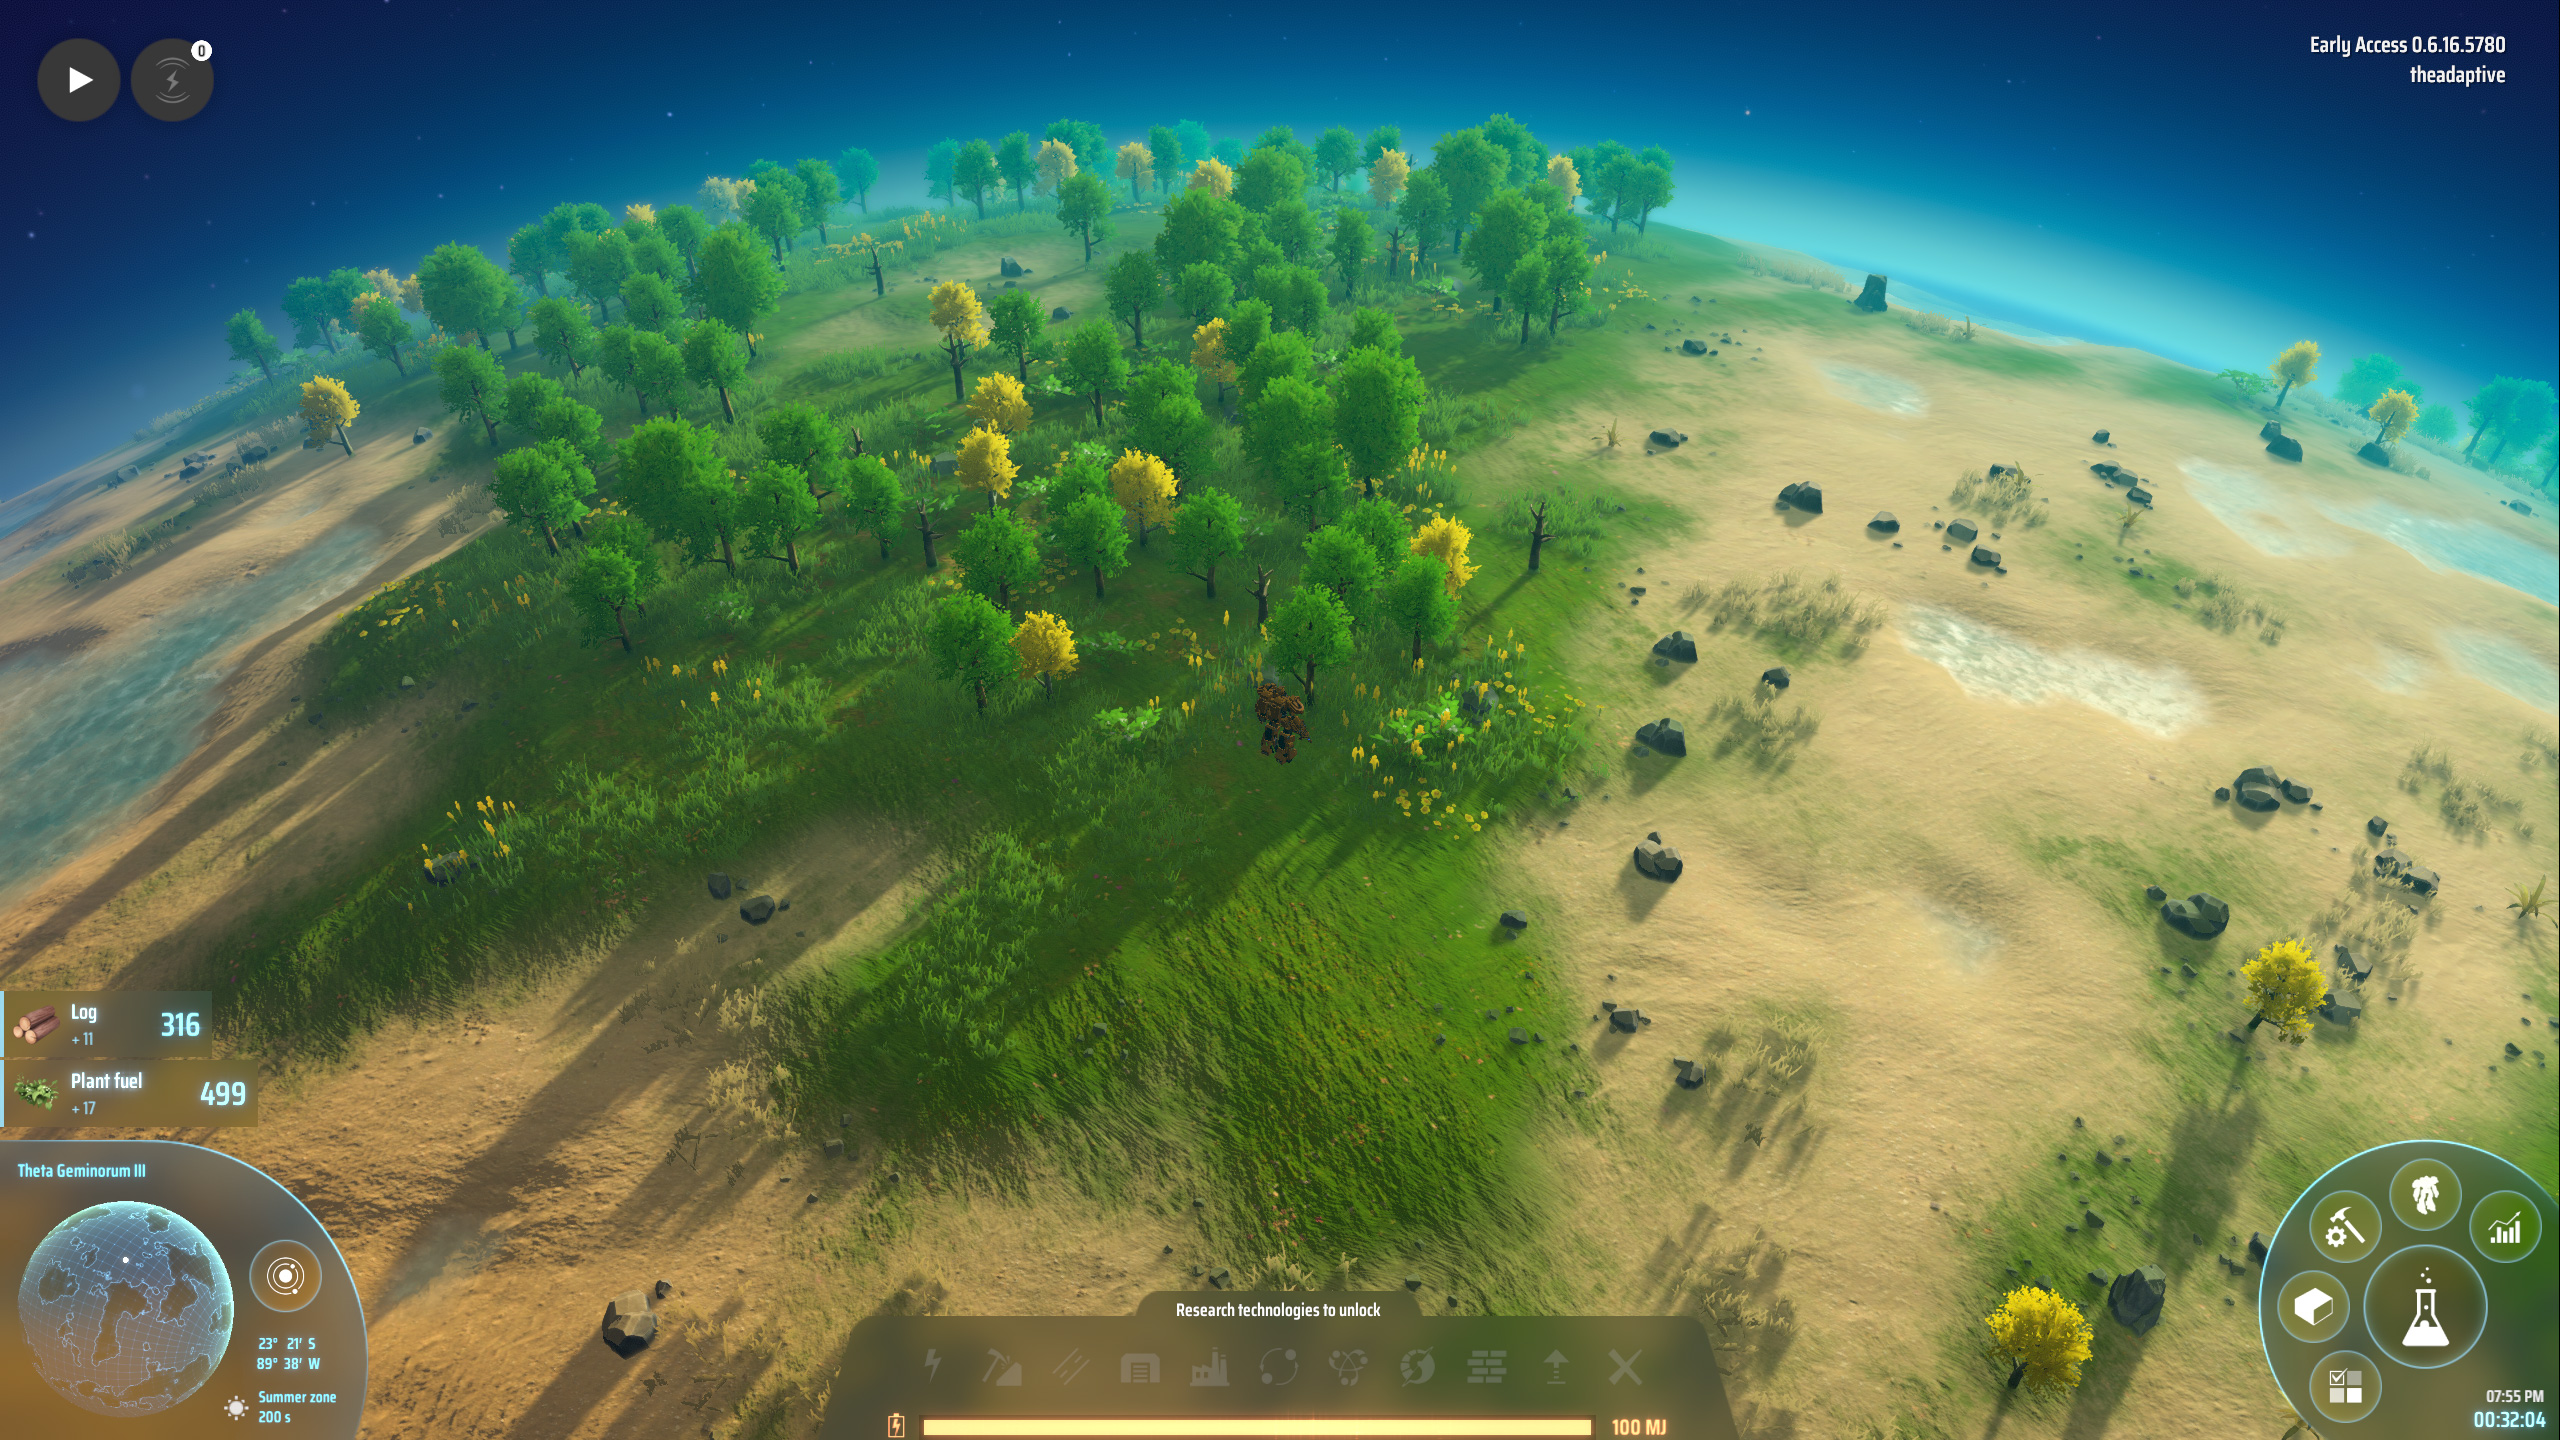 Gameplay screenshot from Dyson Sphere Program